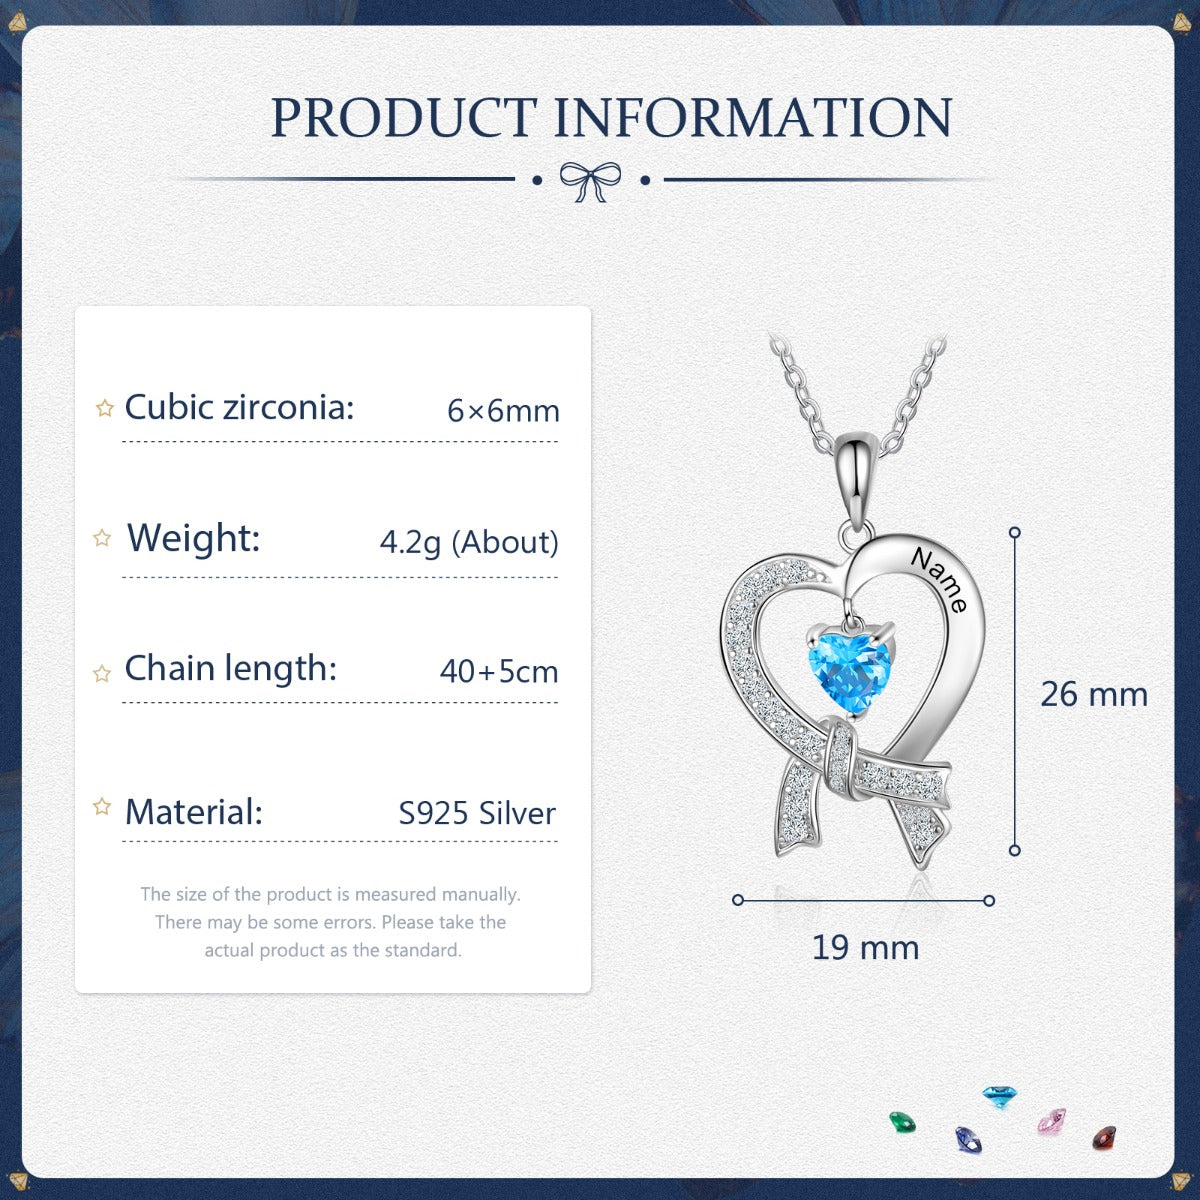 S925 Silver Birthstone Heart Shape Pendant Necklace